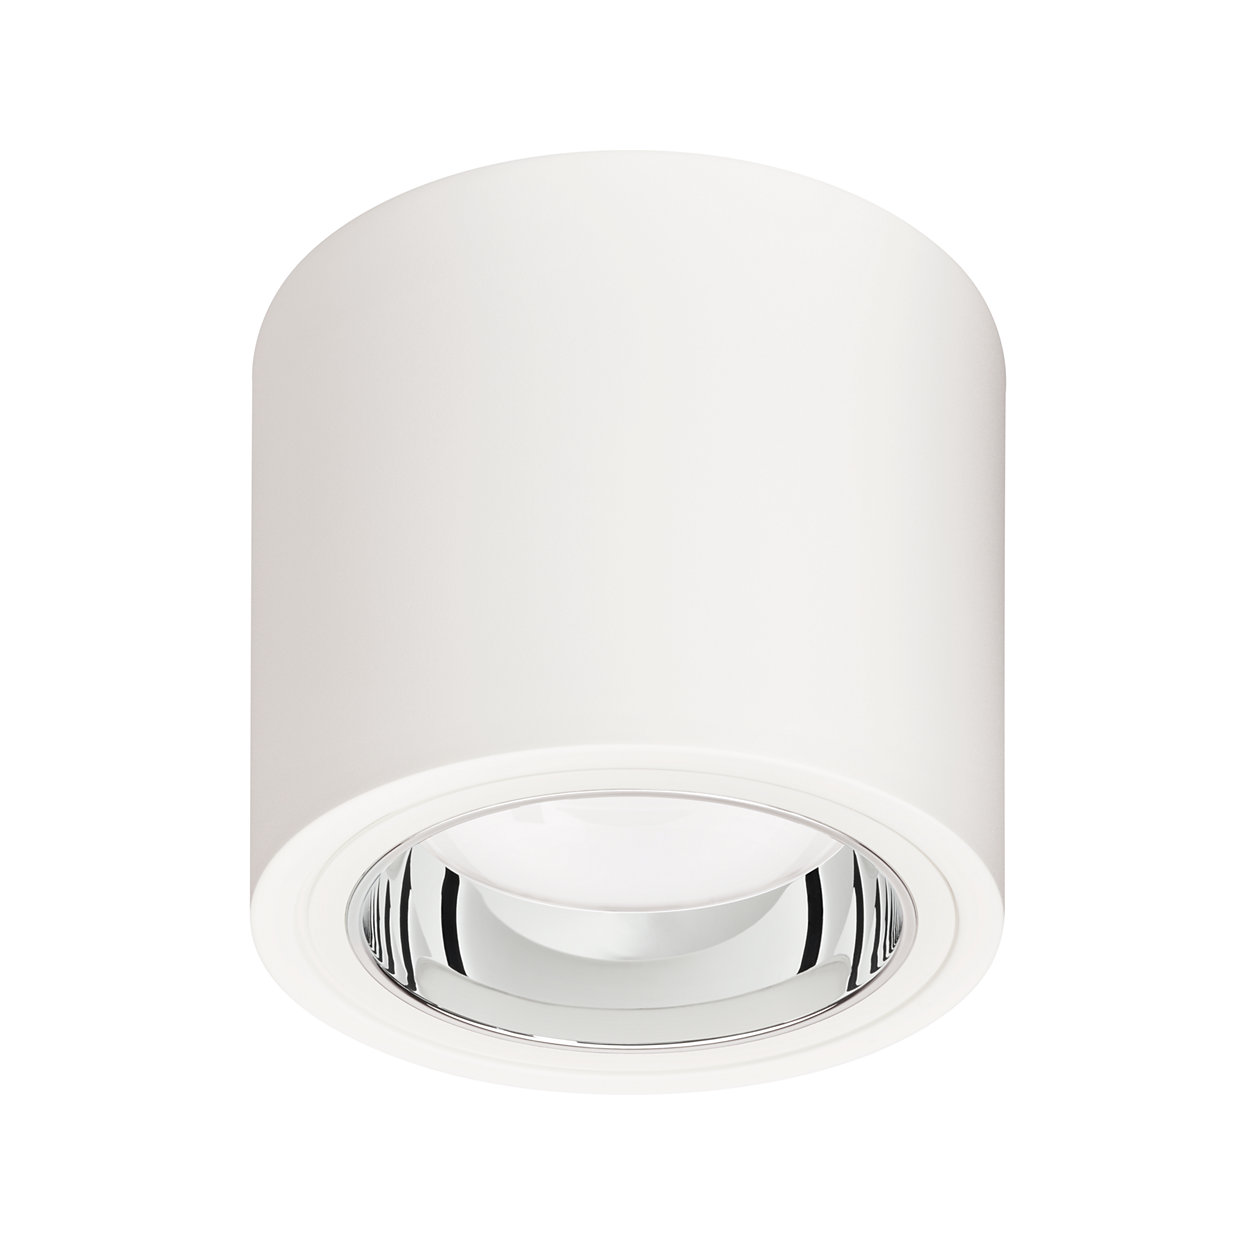 LuxSpace Compact Anbaudownlight - hohe Effizienz, hoher Komfort und elegantes Design